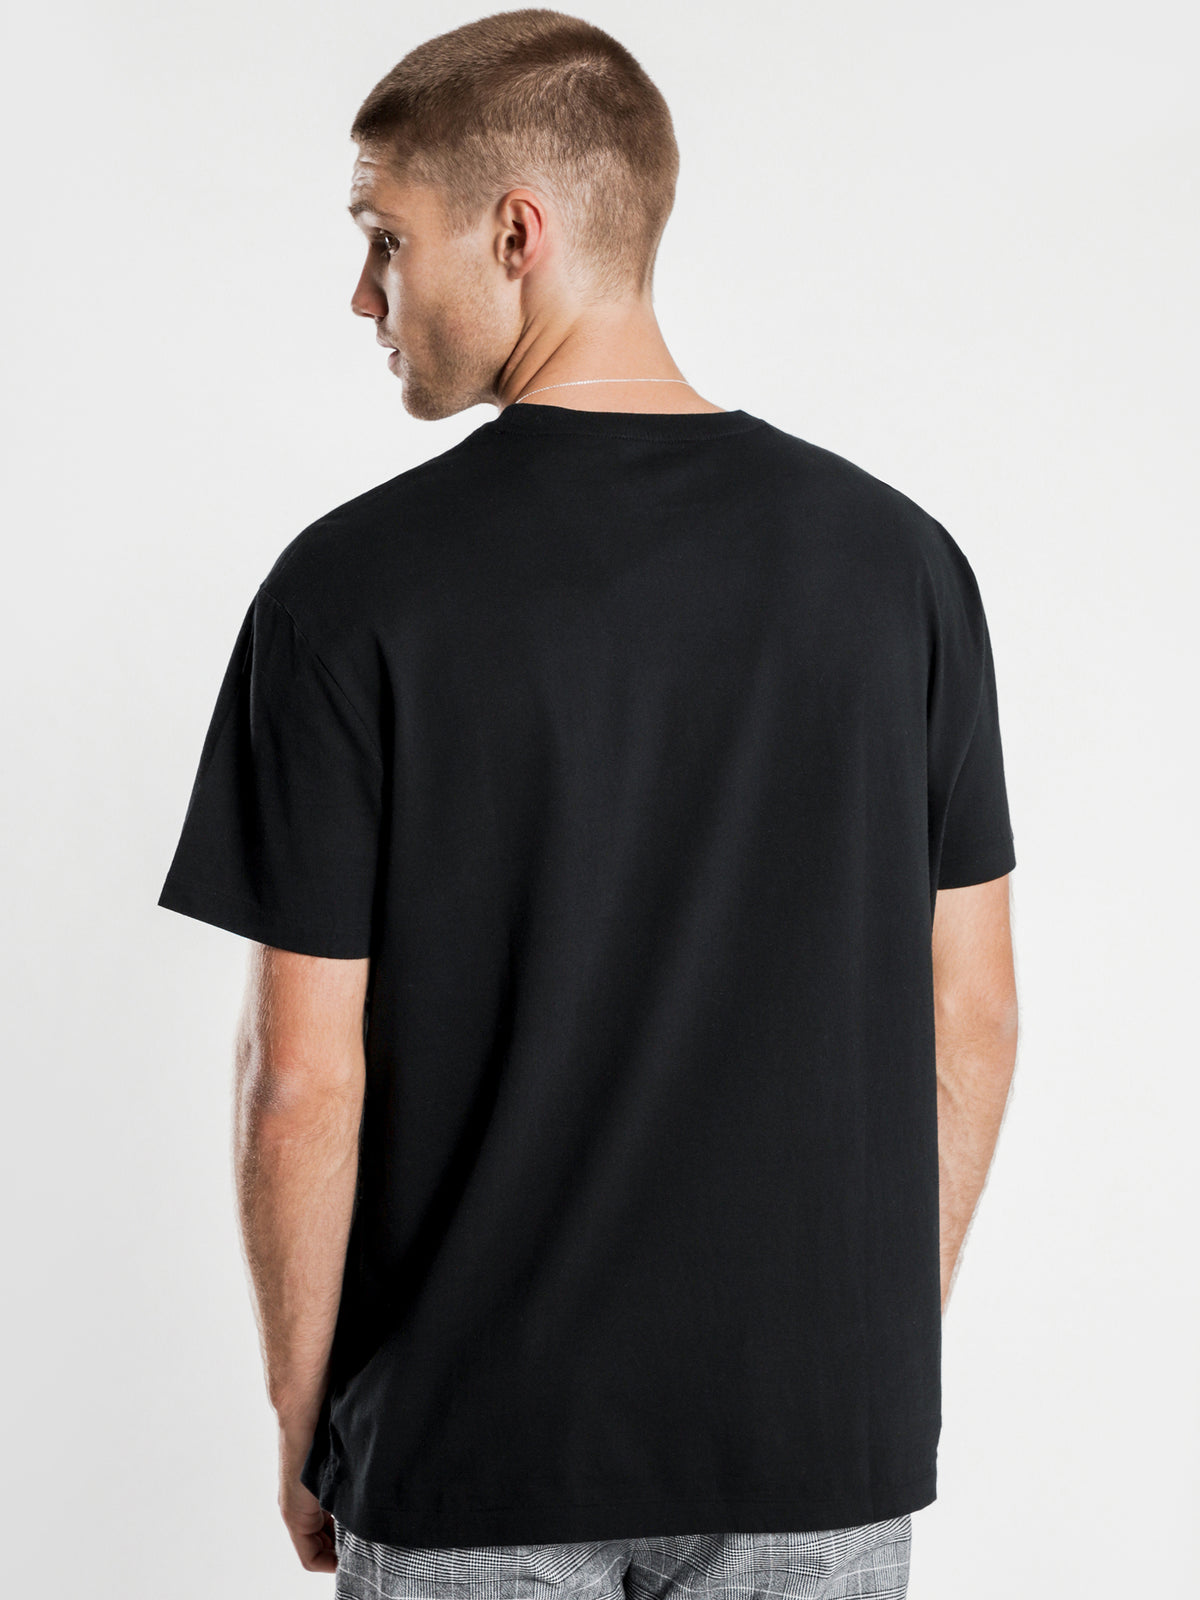 Classic Fit T-Shirt in Black